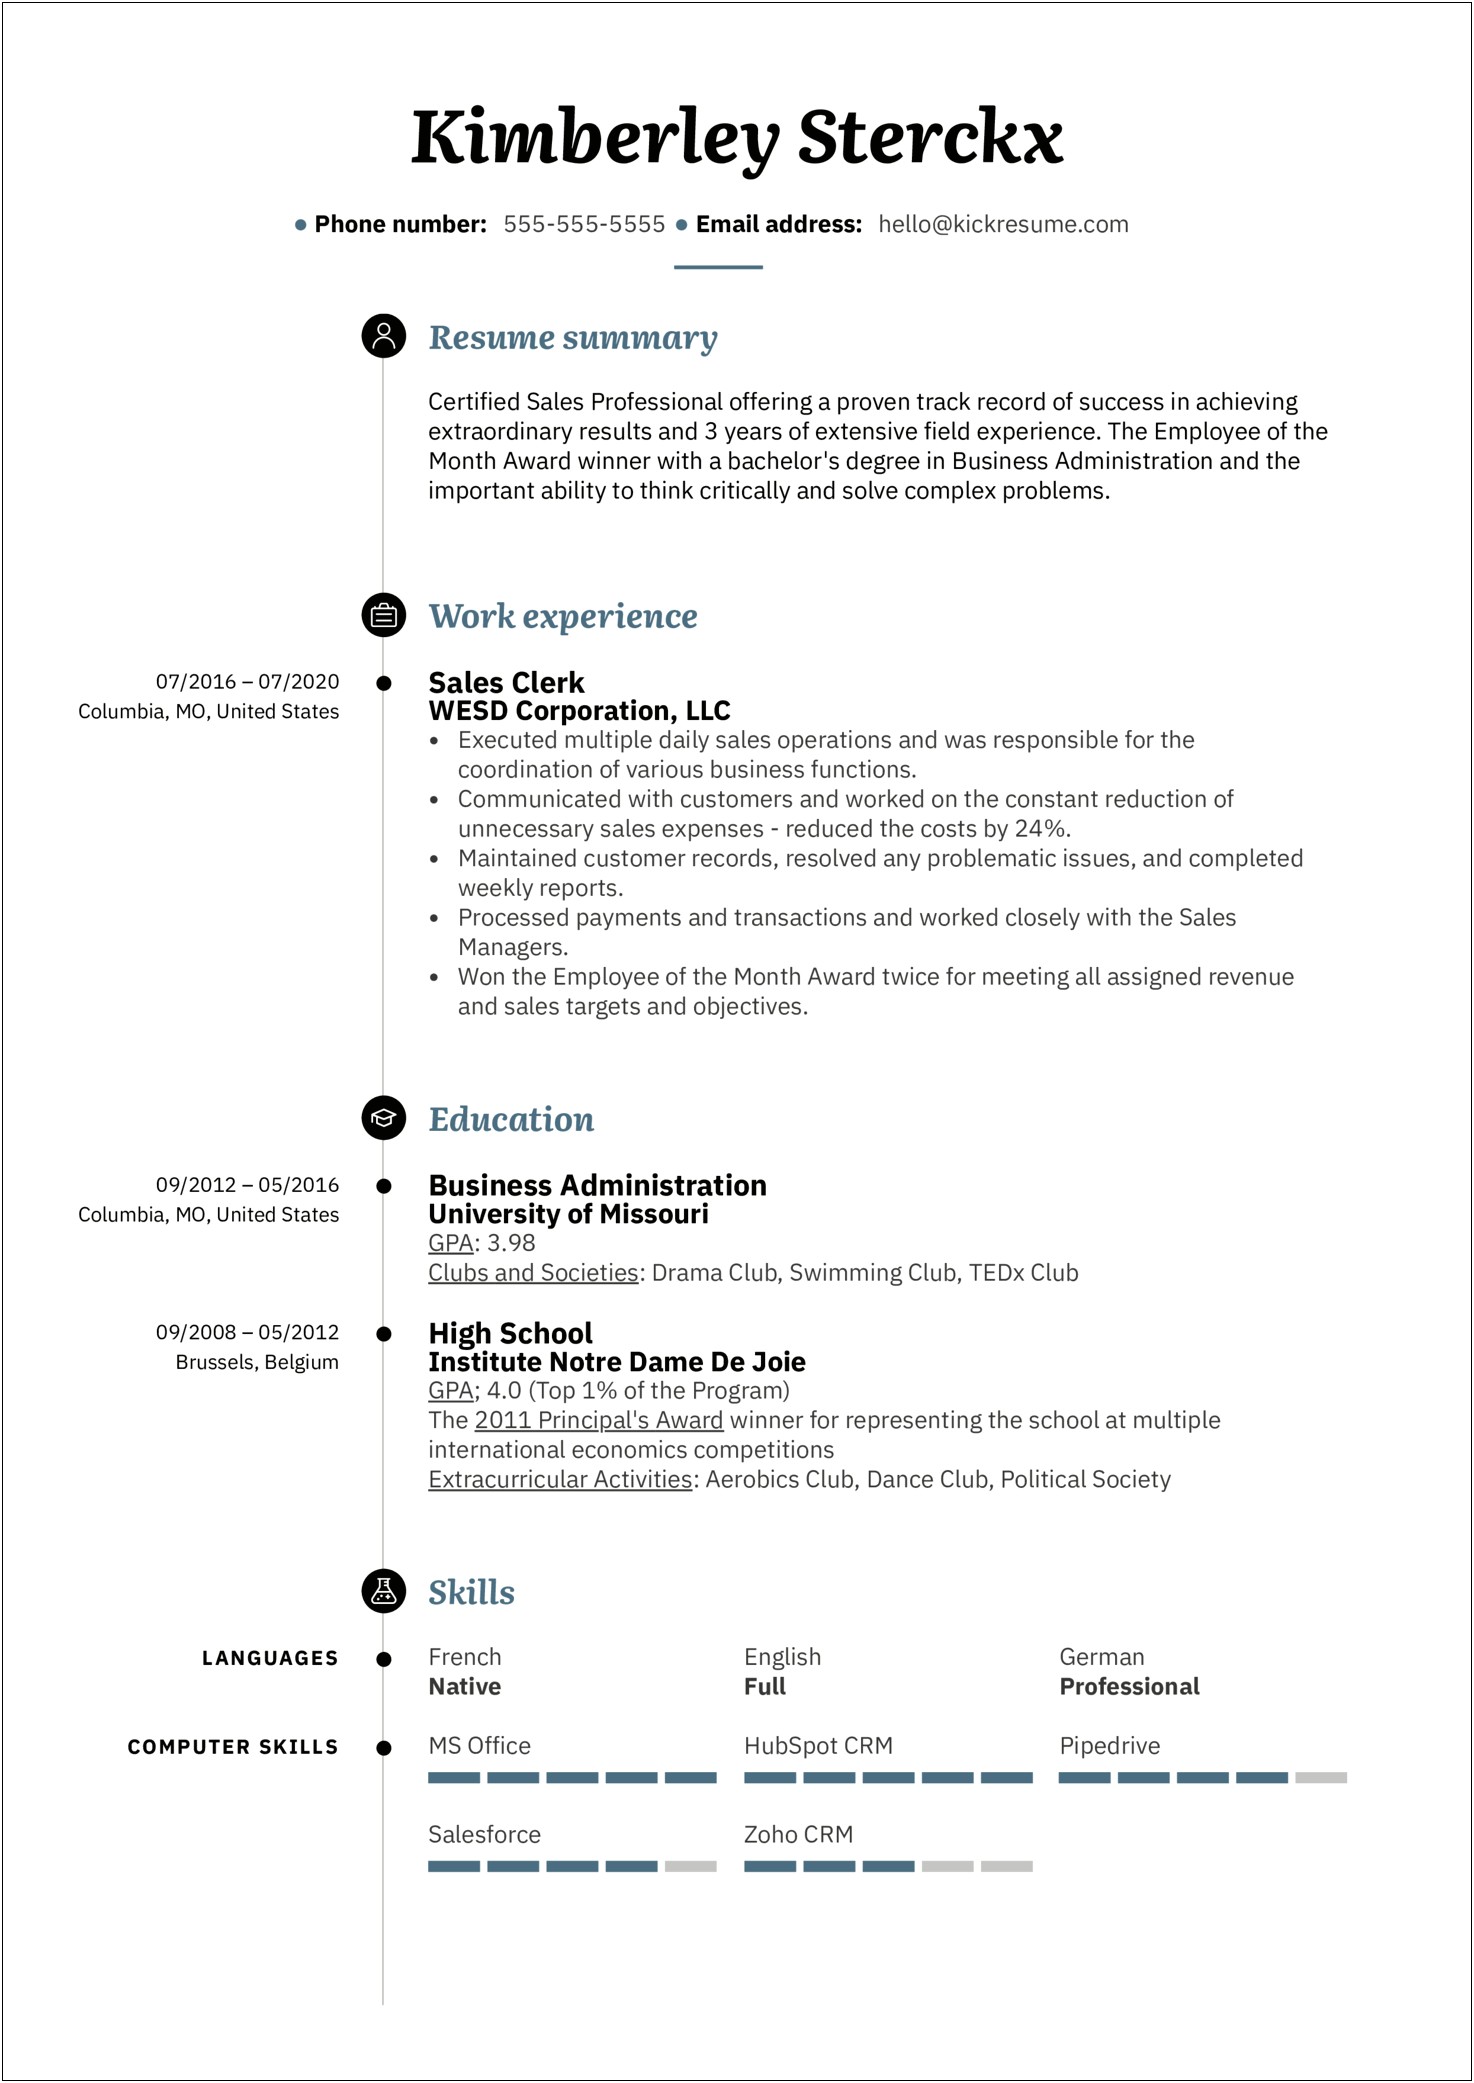 Sample Resume Format 2016 Usa